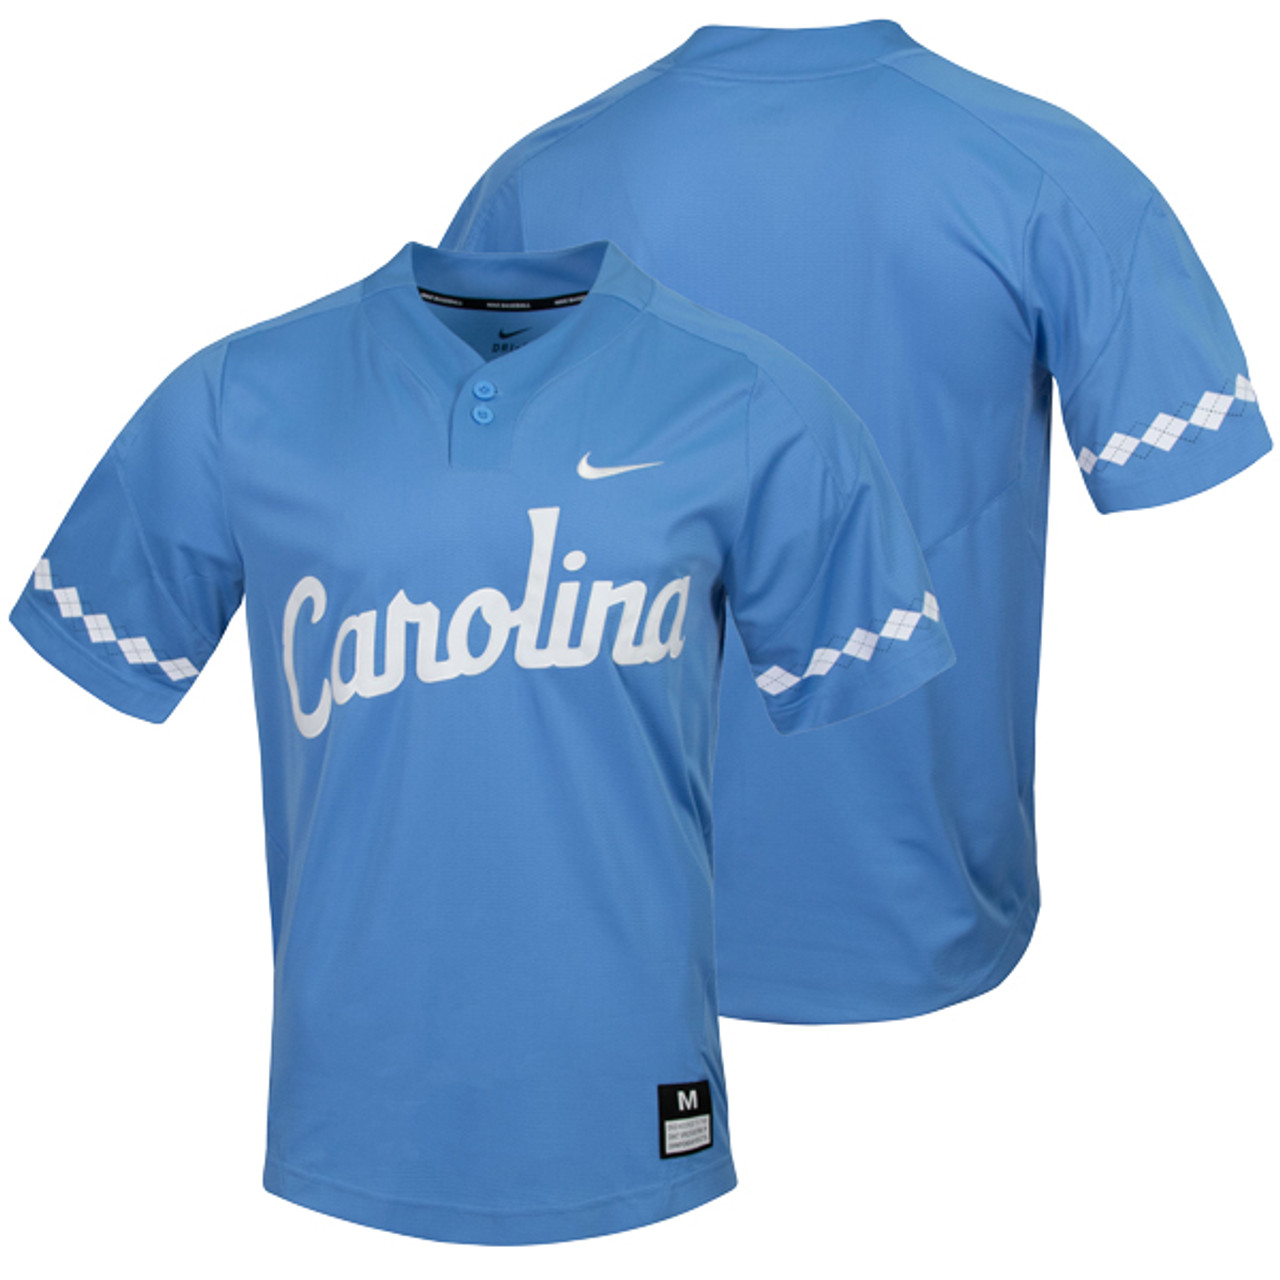 carolina baseball jersey